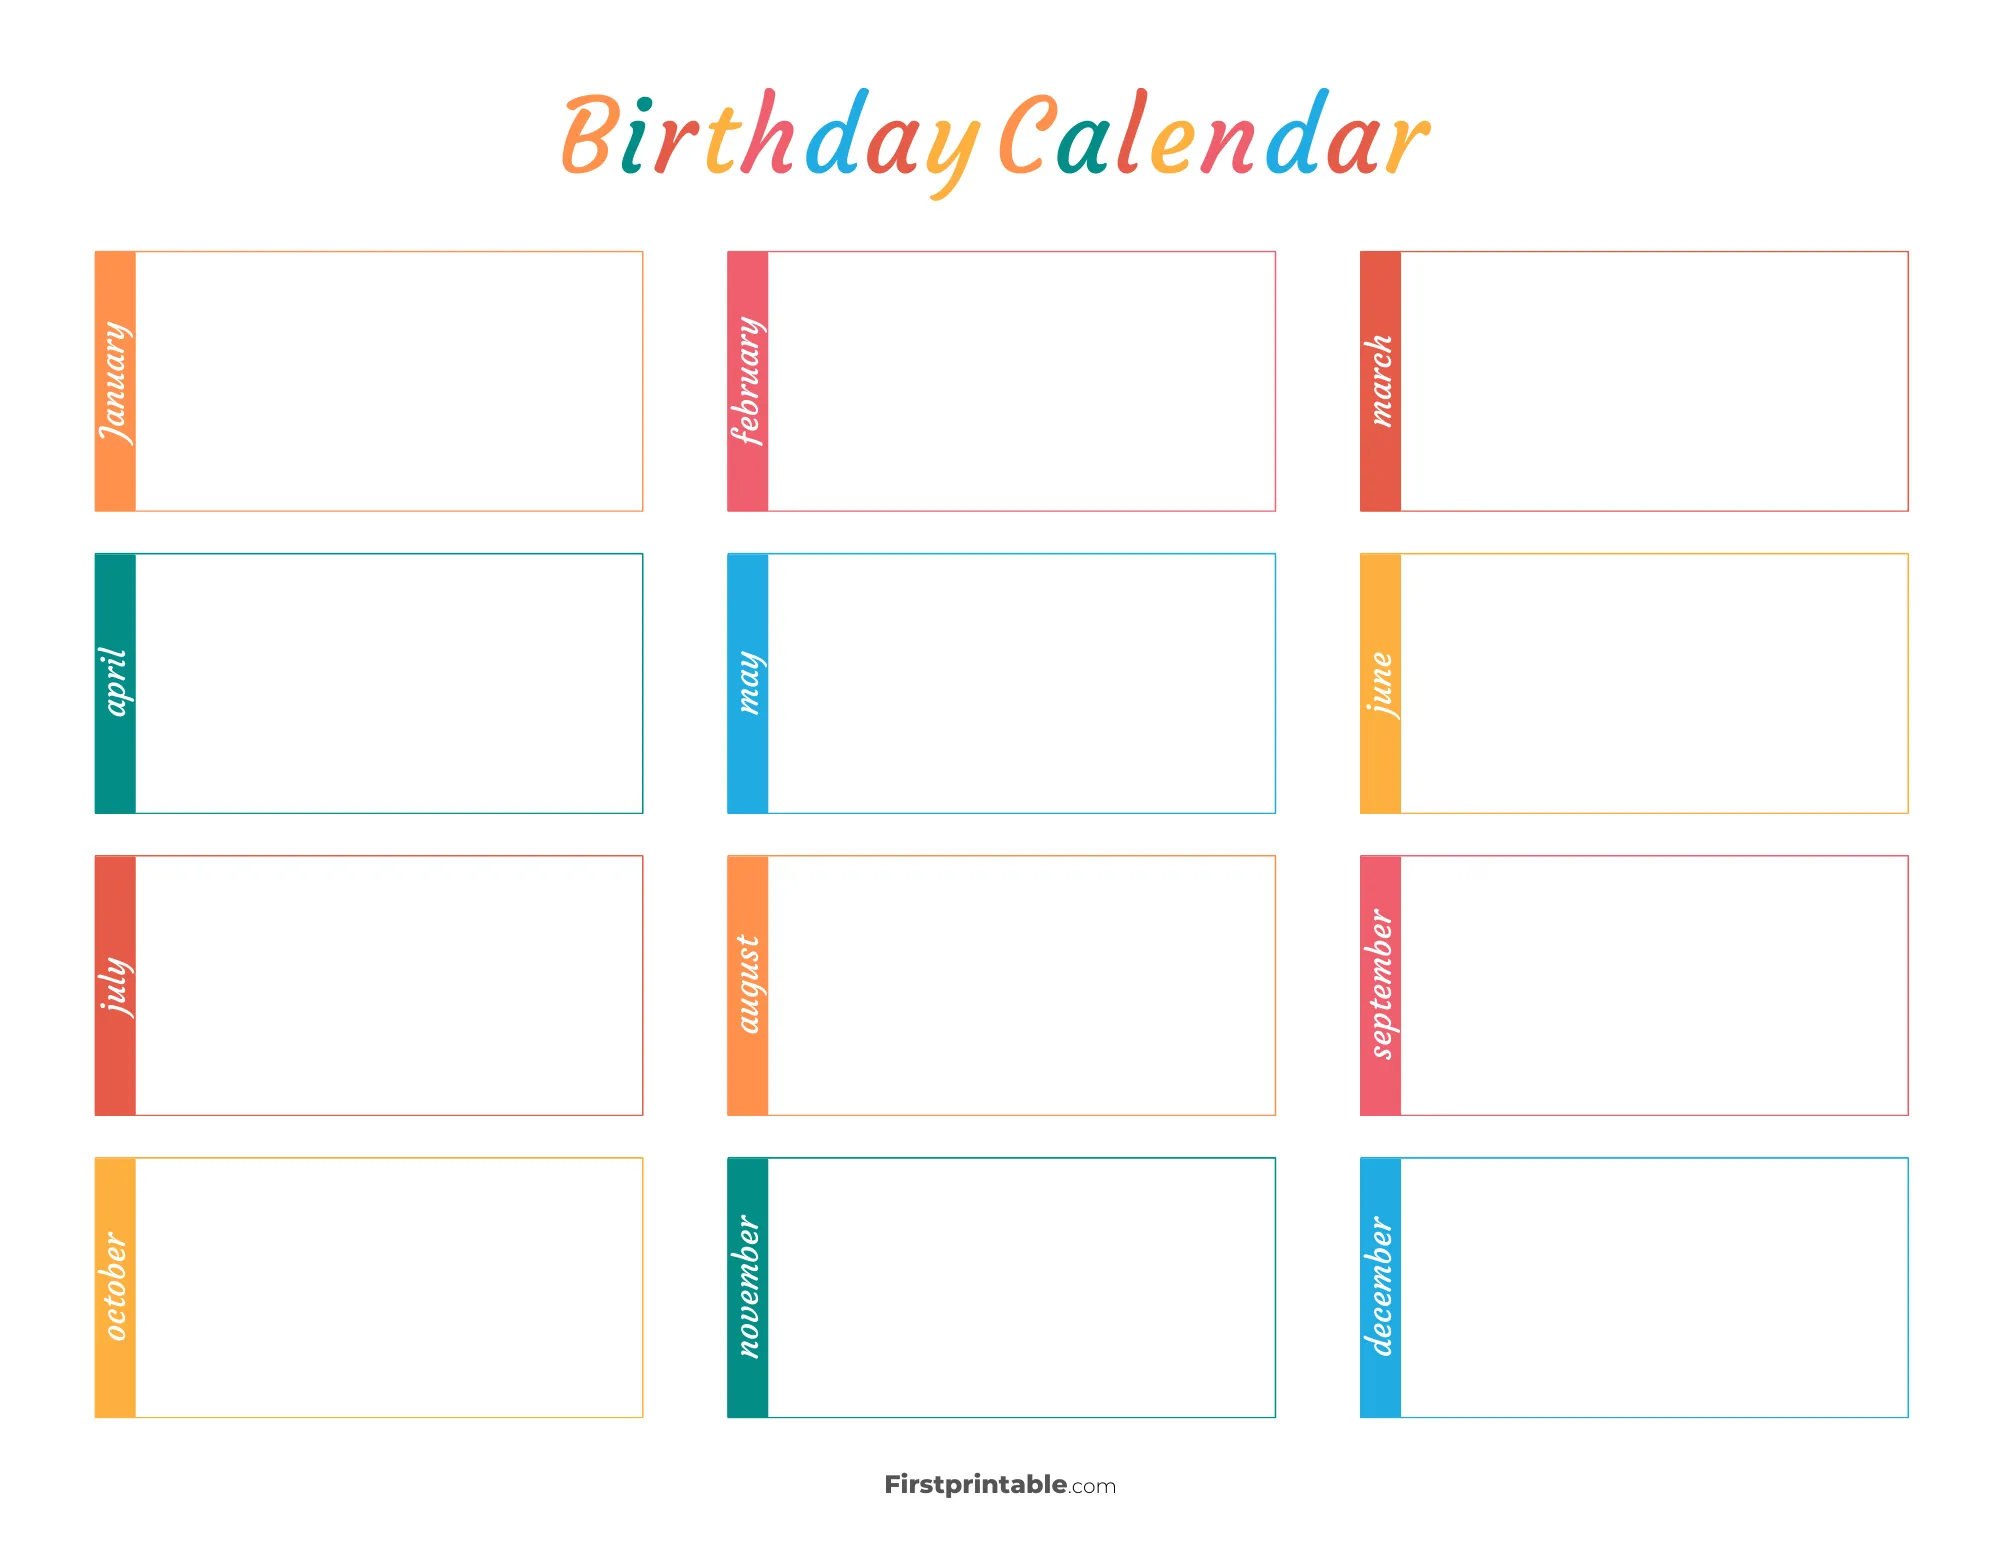 Birthday Calendar | 30 Free Templates